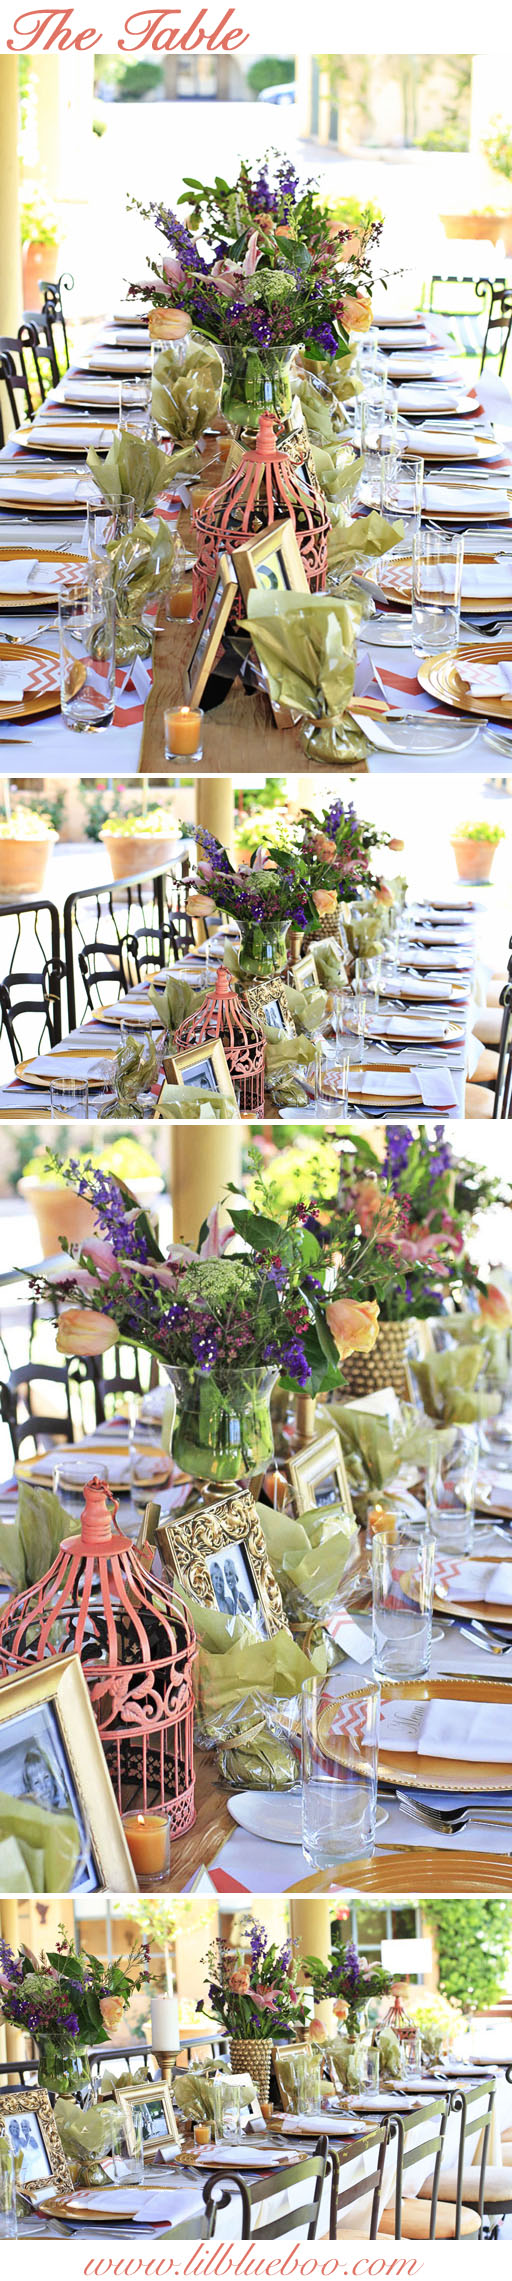 Party Table Decor in Coral & Gold via lilblueboo.com #diy #party #decor #chevron #coral